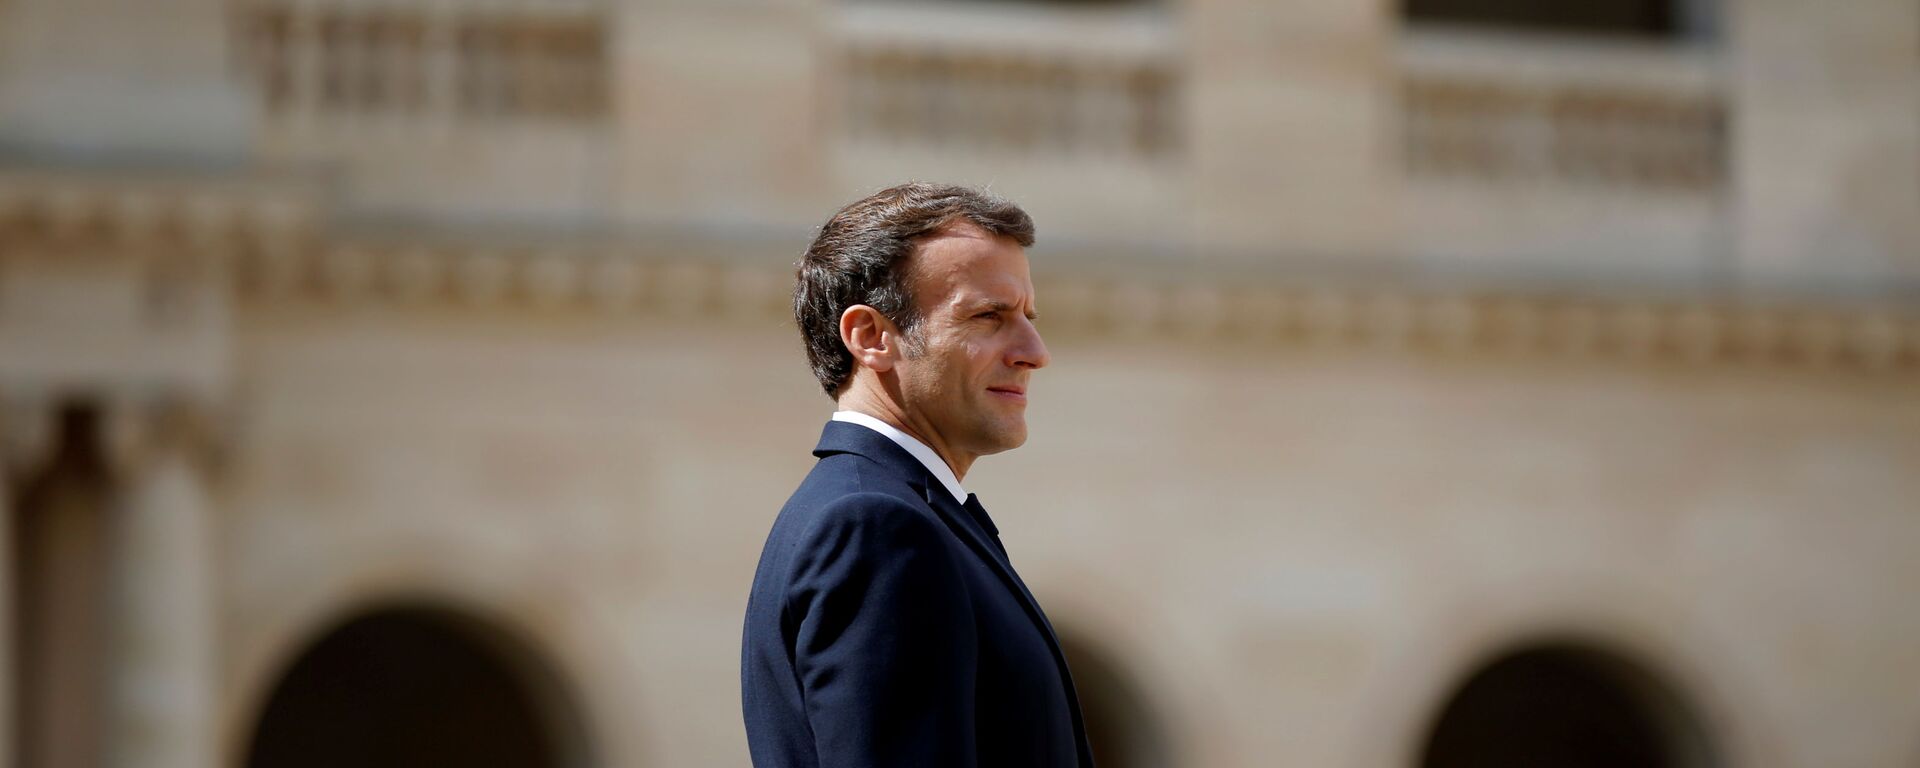 French President Emmanuel Macron attends a prise d'armes military ceremony at the Invalides in Paris, France, July 8, 2021. REUTERS/Sarah Meyssonnier/Pool - Sputnik International, 1920, 29.10.2021